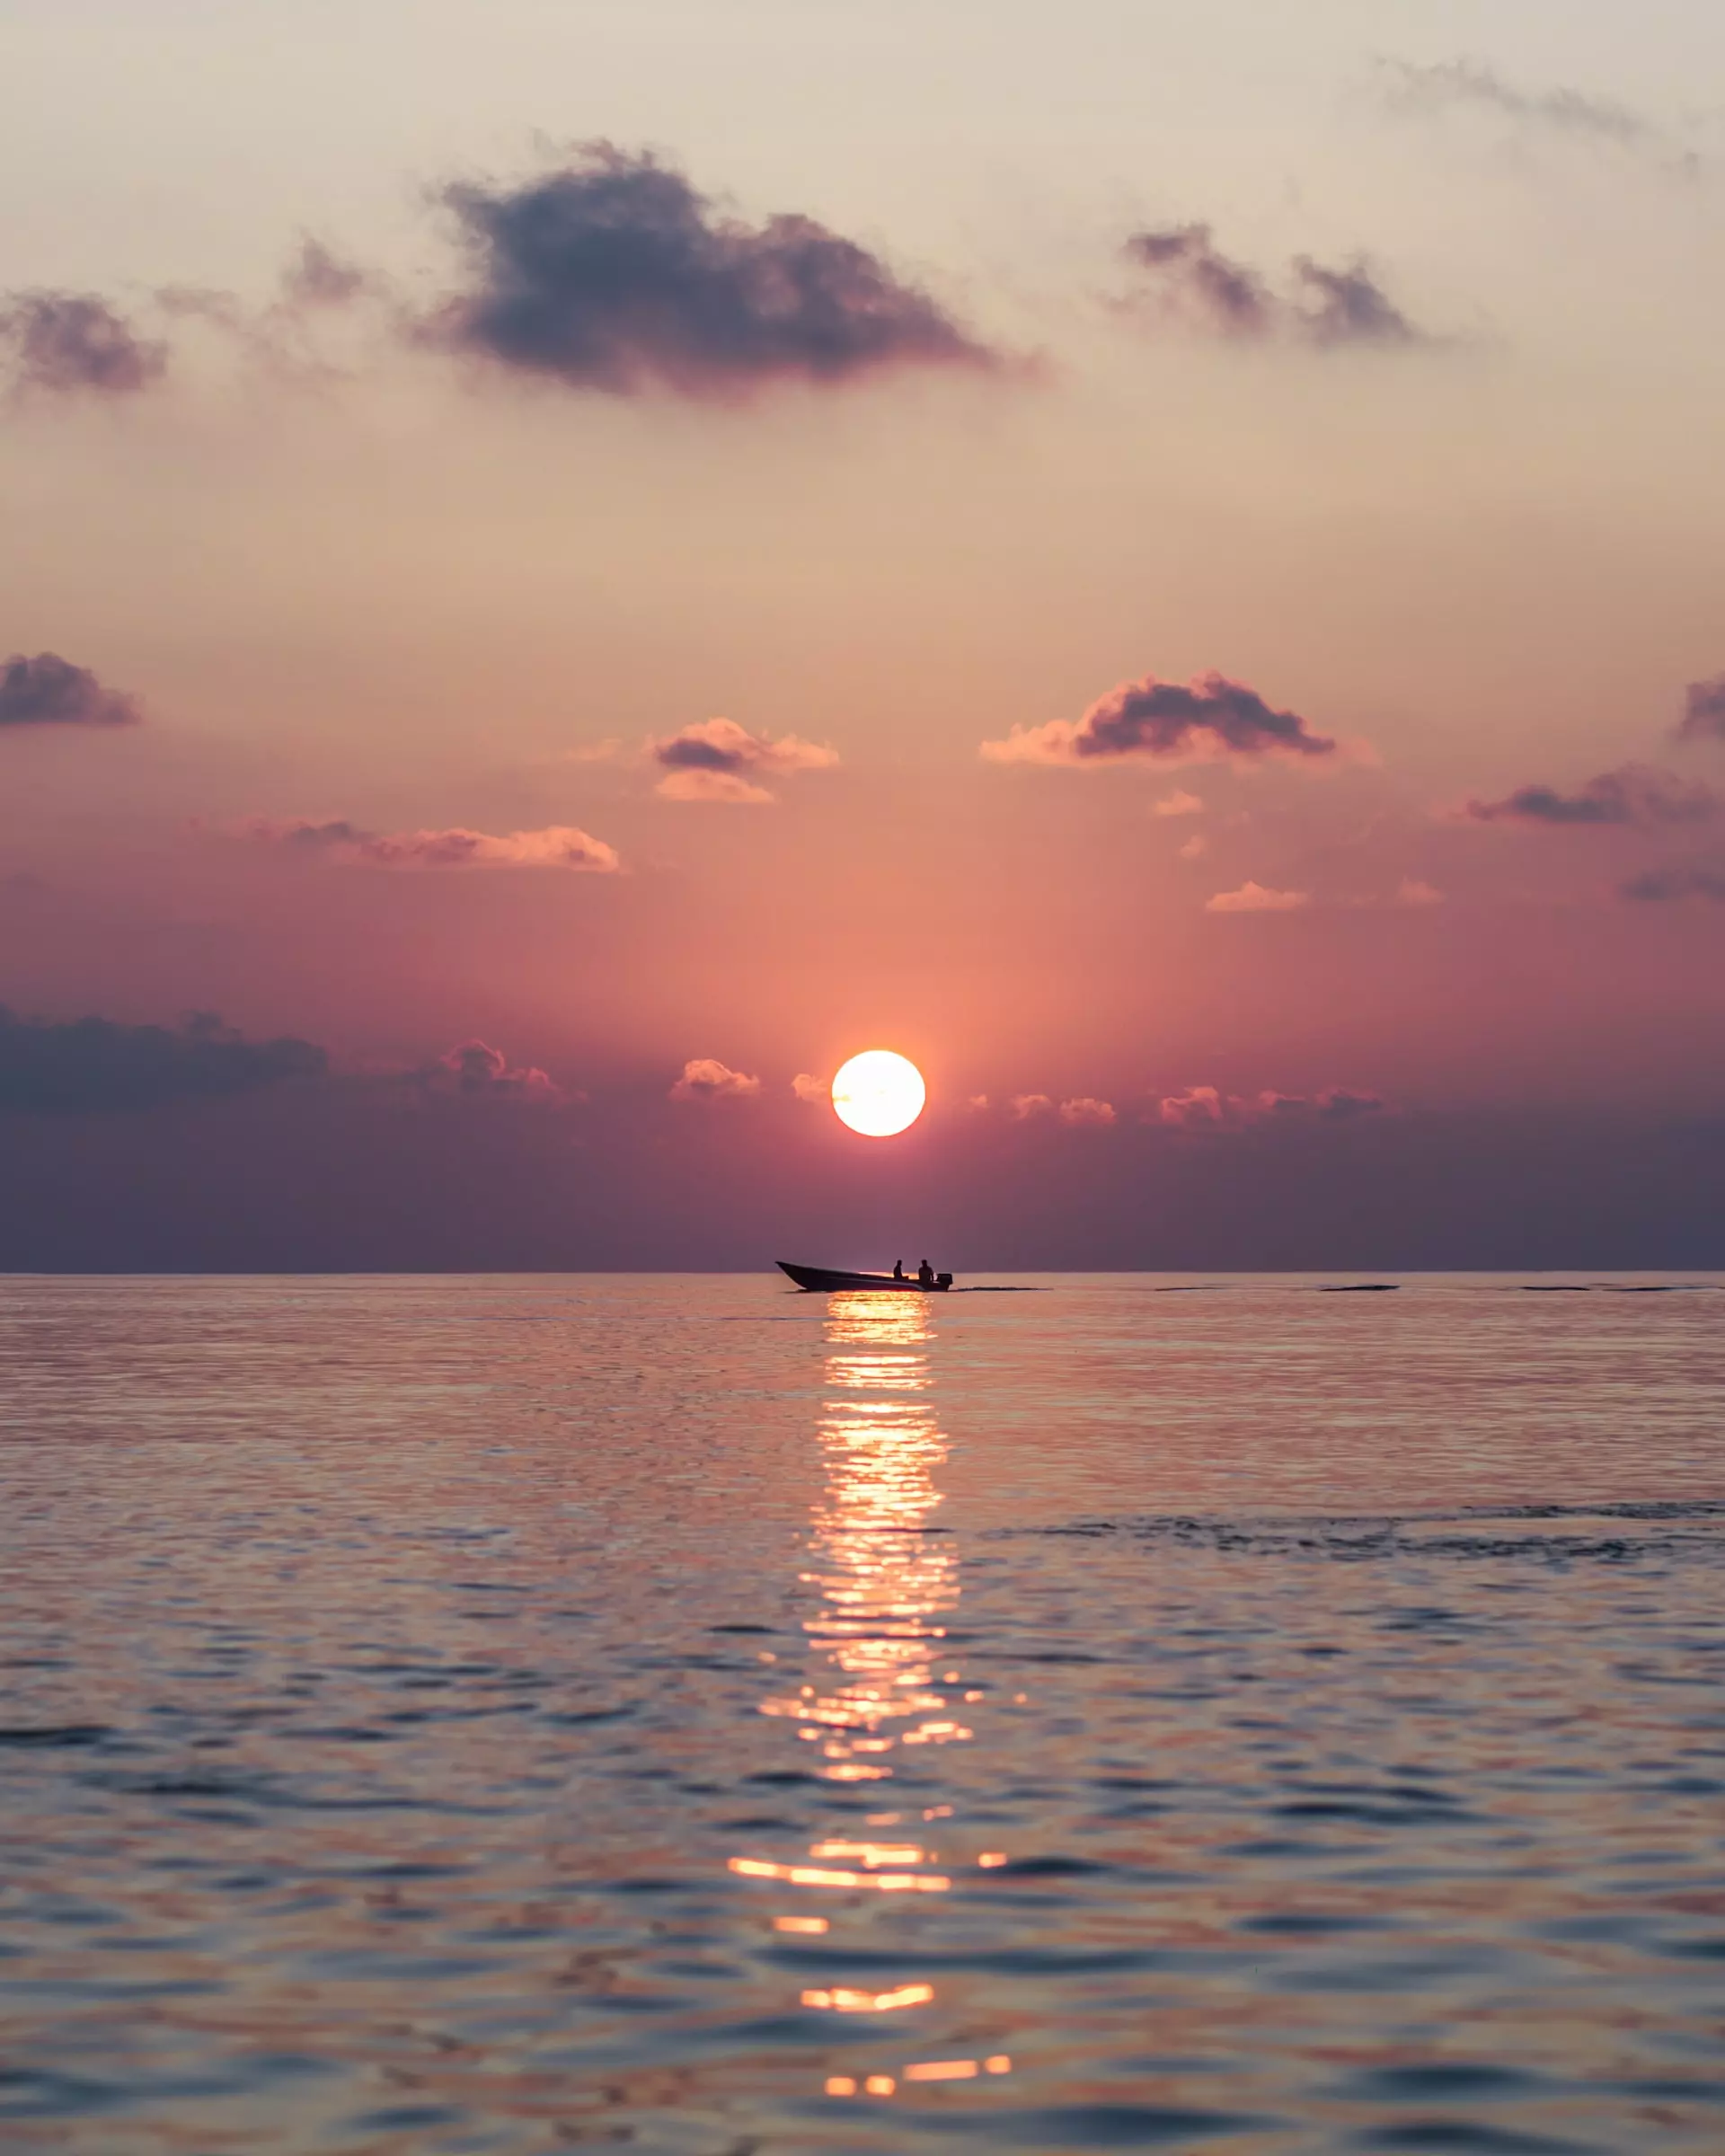 Sun setting over a small boat on a calm sea